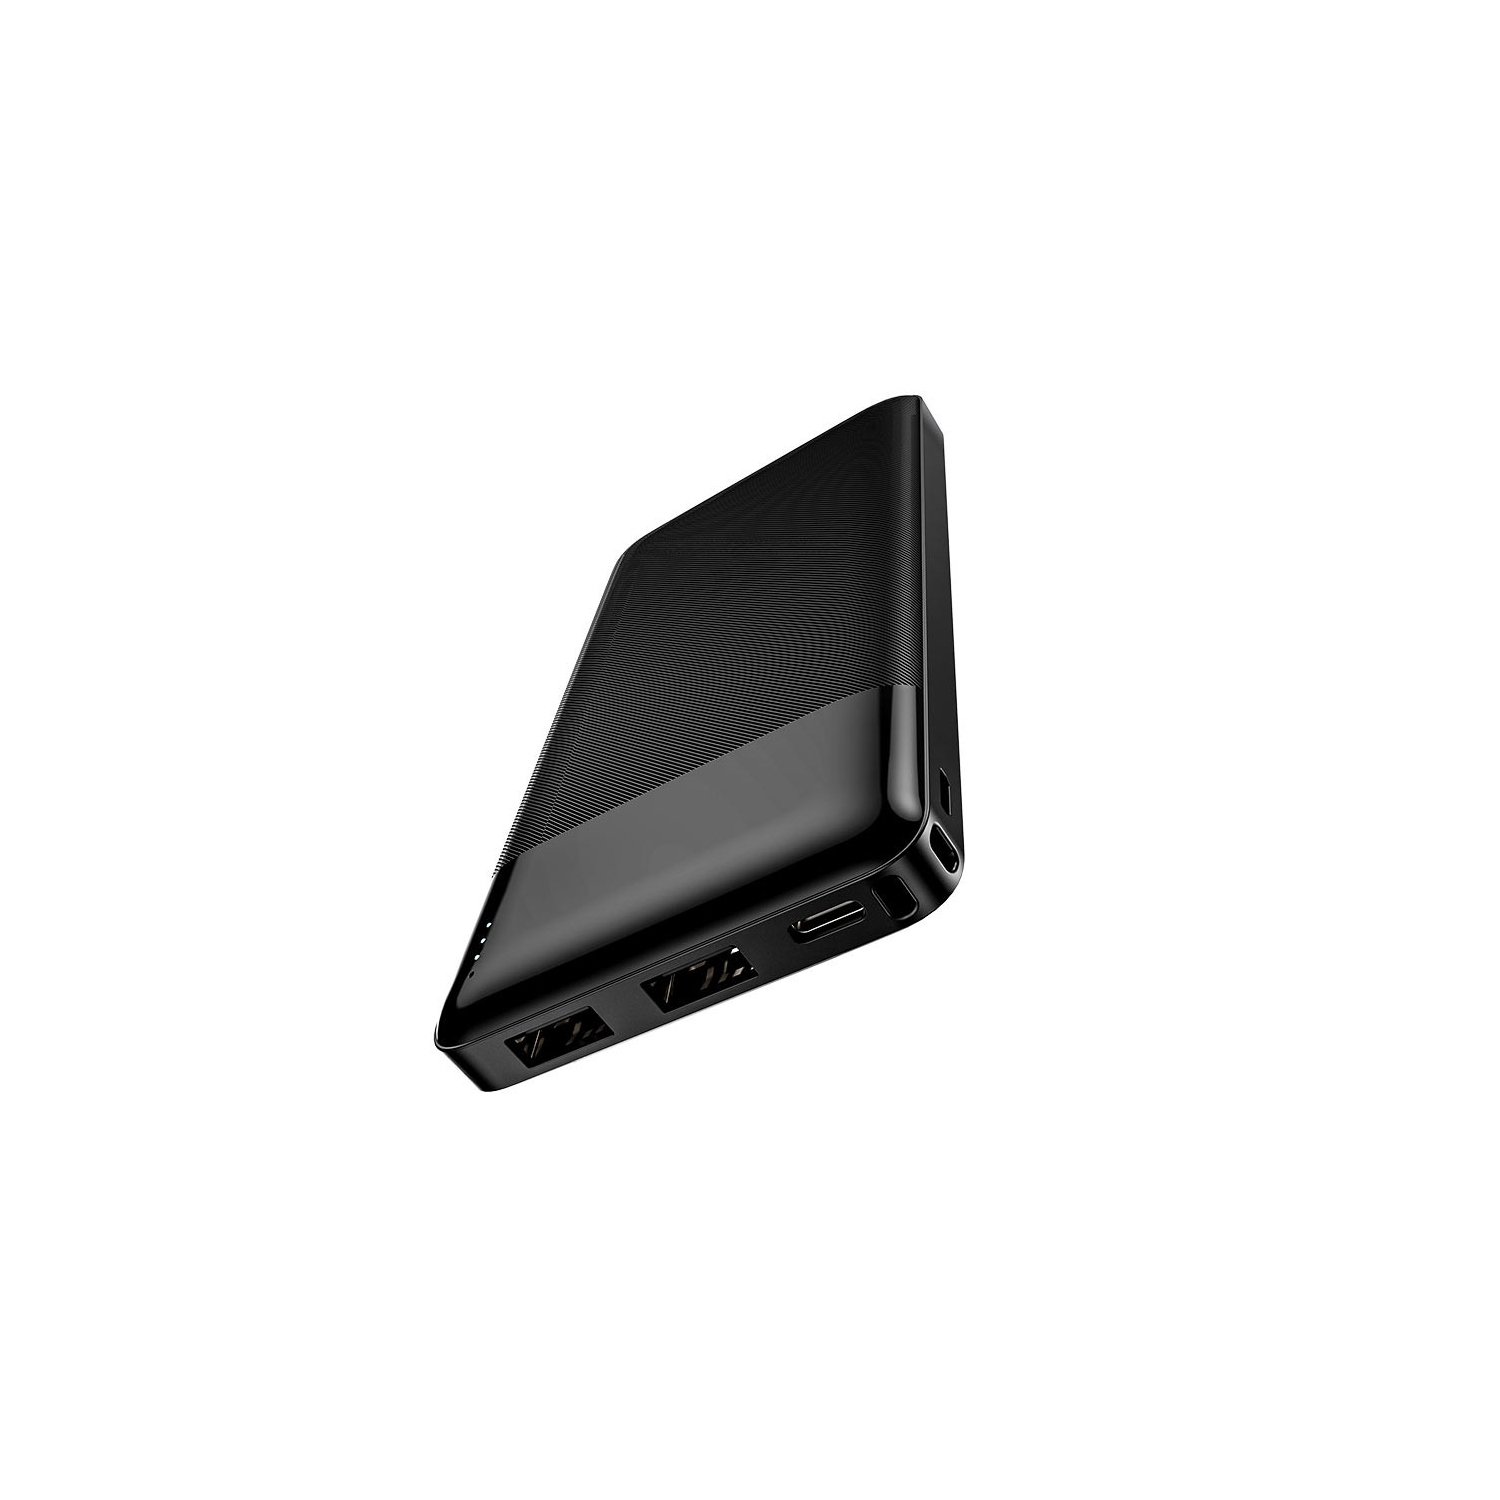 10000mAh Micro USB USB-C External Battery Charger Portable Power Bank for iPhone Samsung iPad Tablets, Black